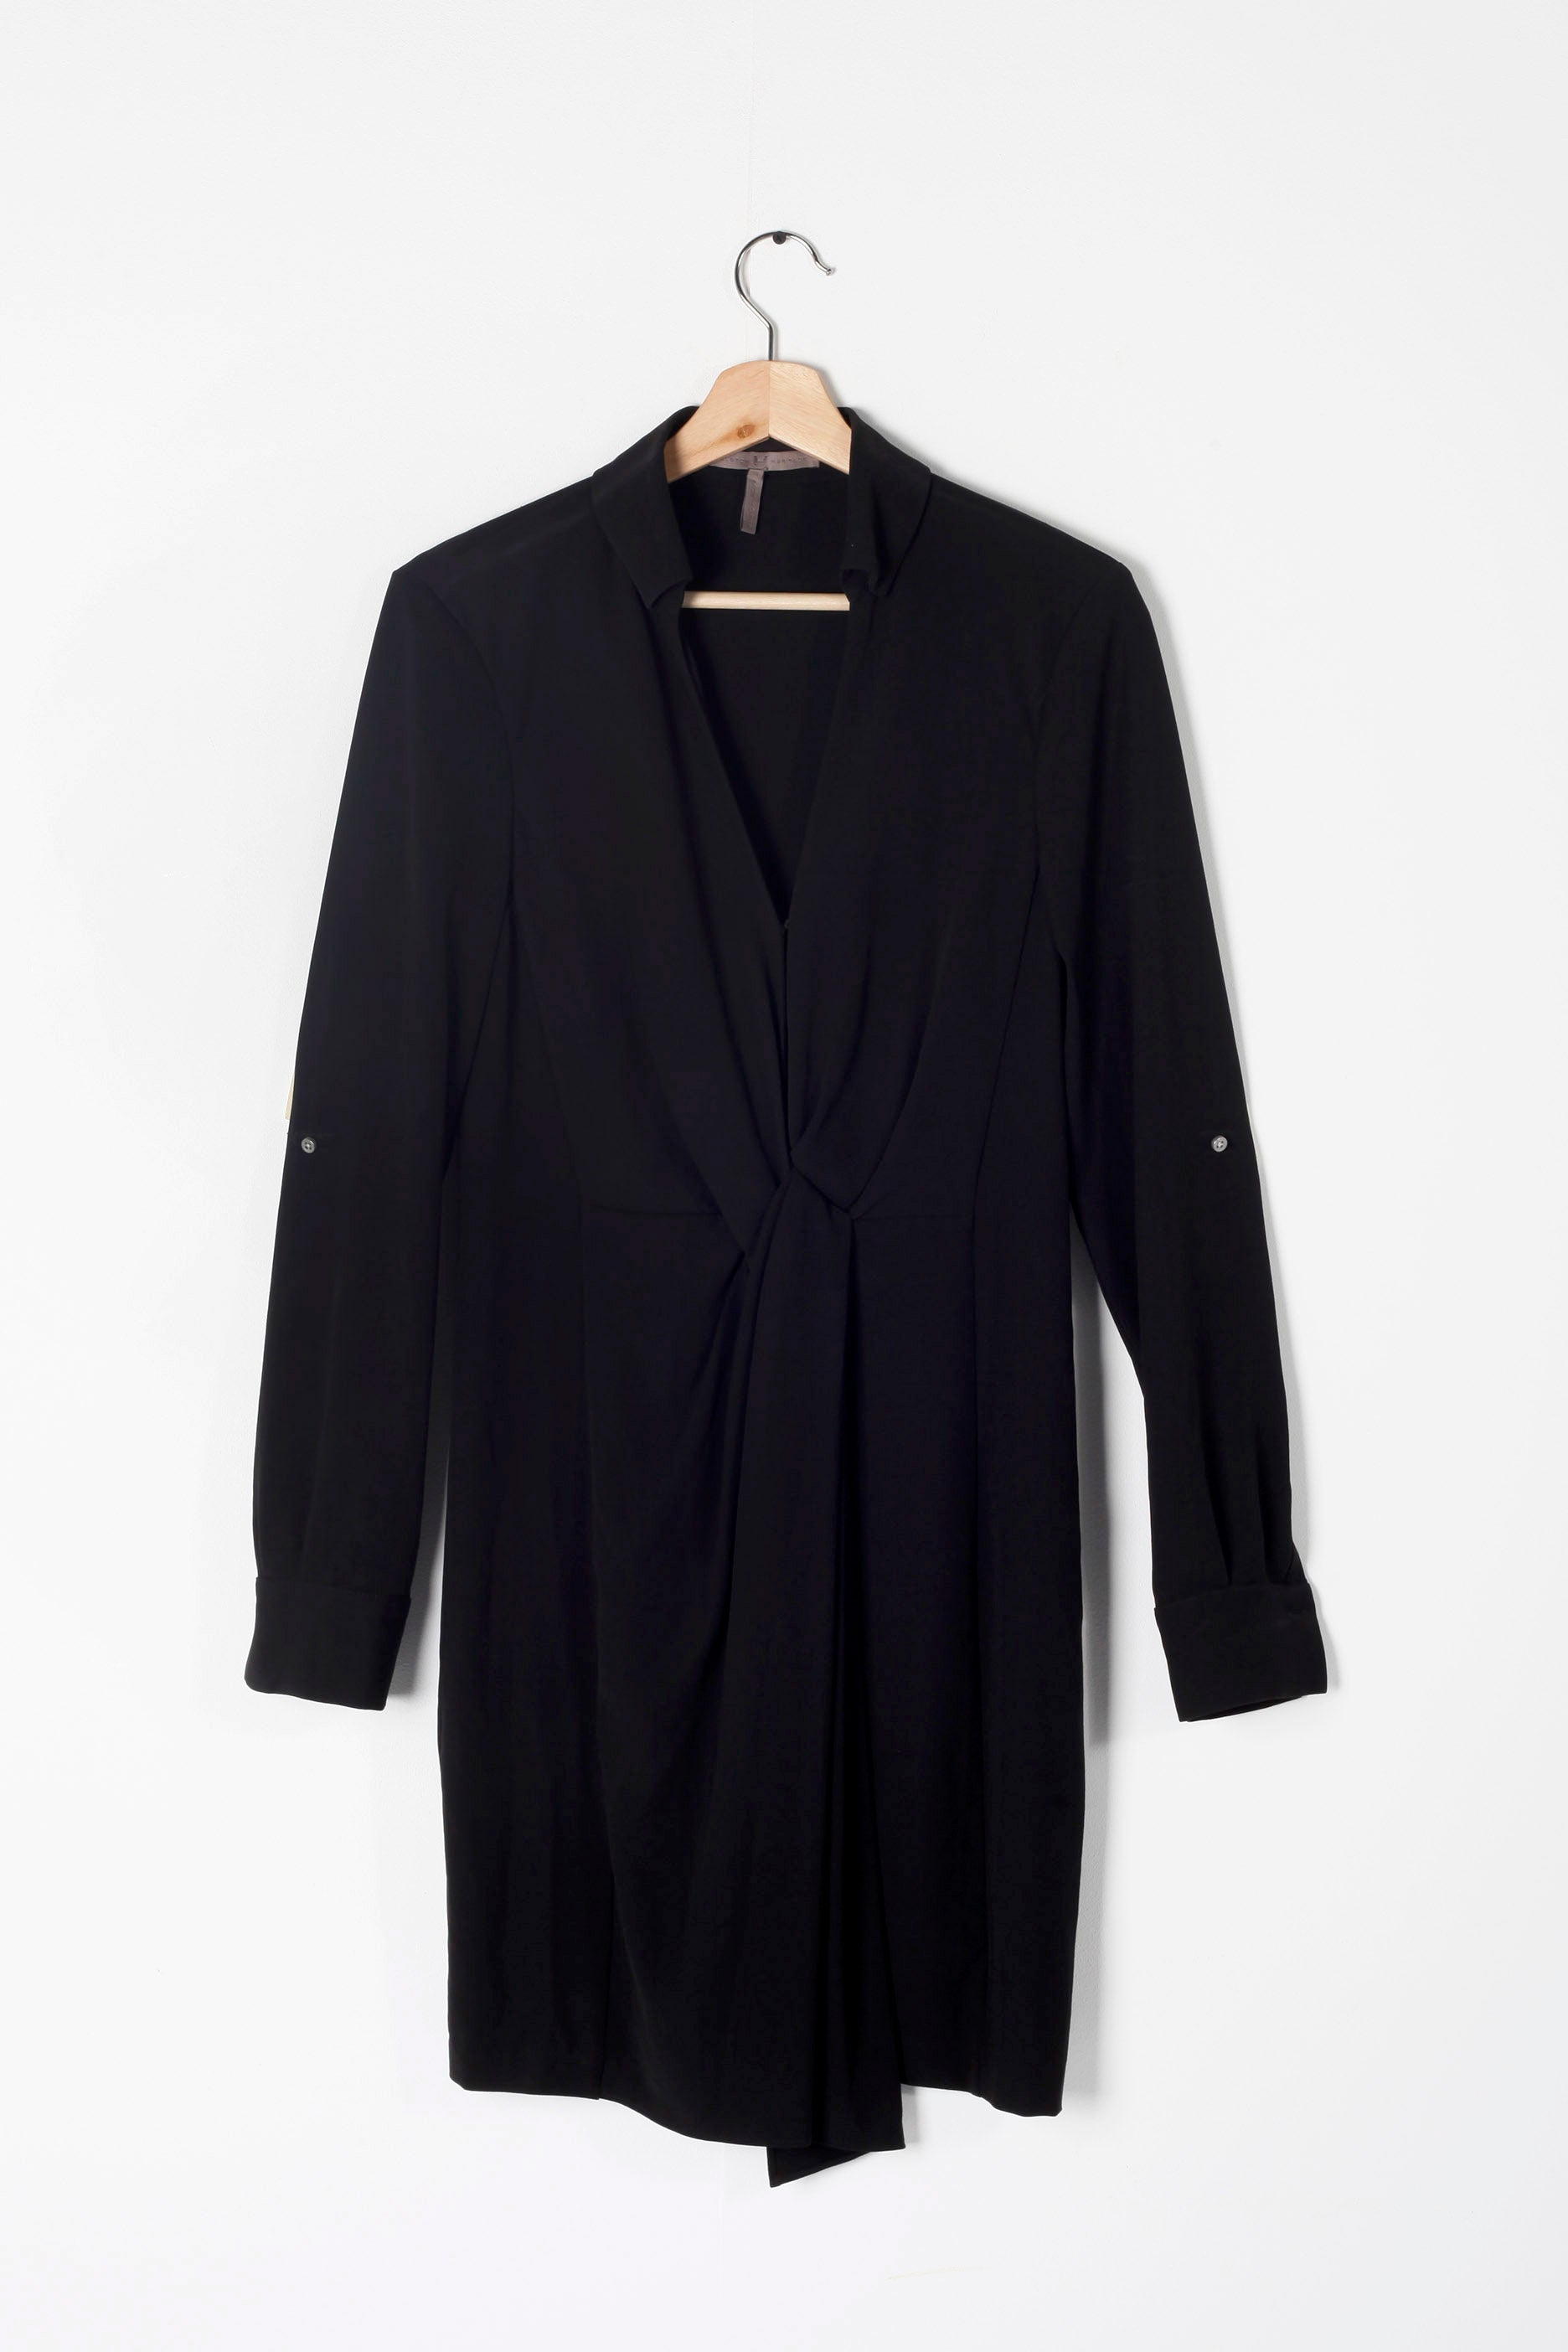 Black Halston Shirt Dress (Eu36-38)